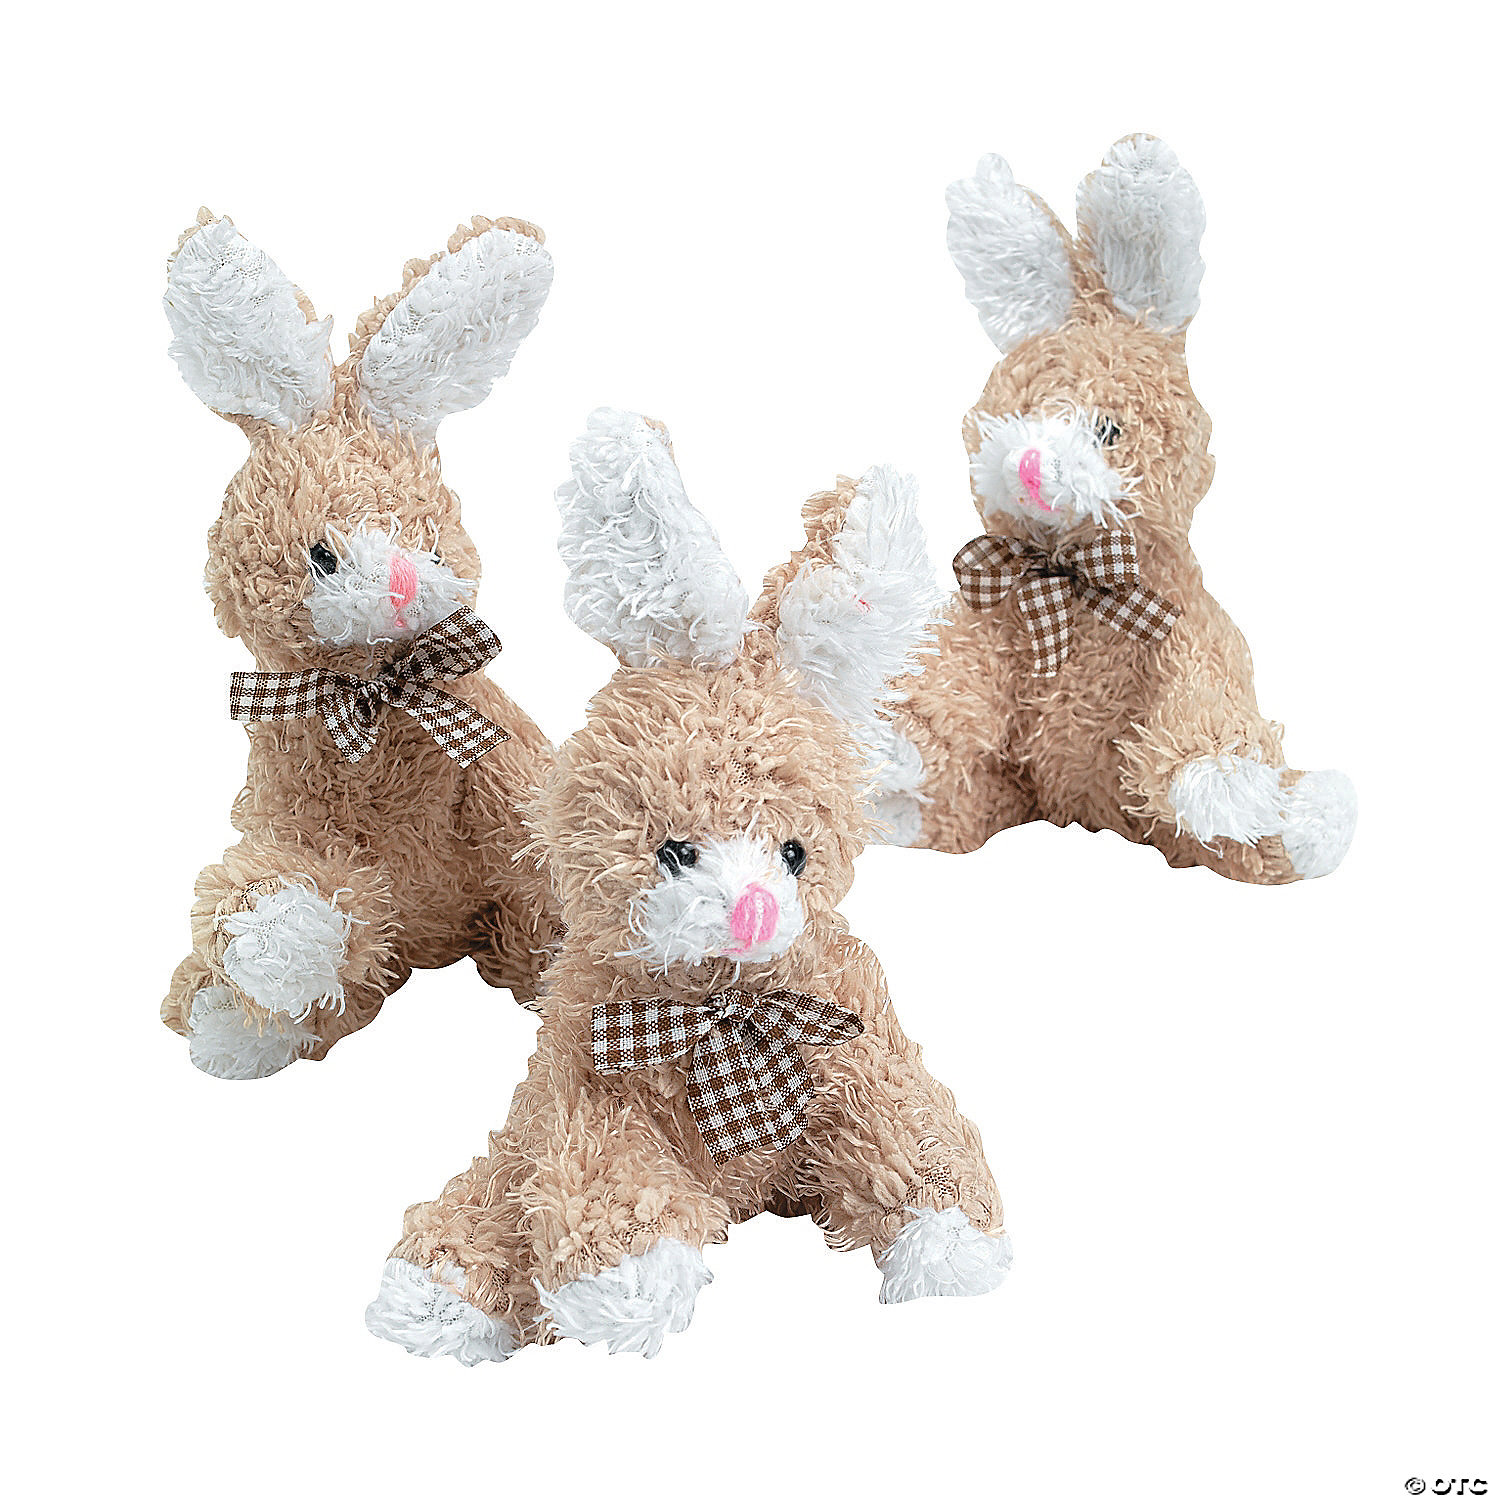 toy stuffed bunnies